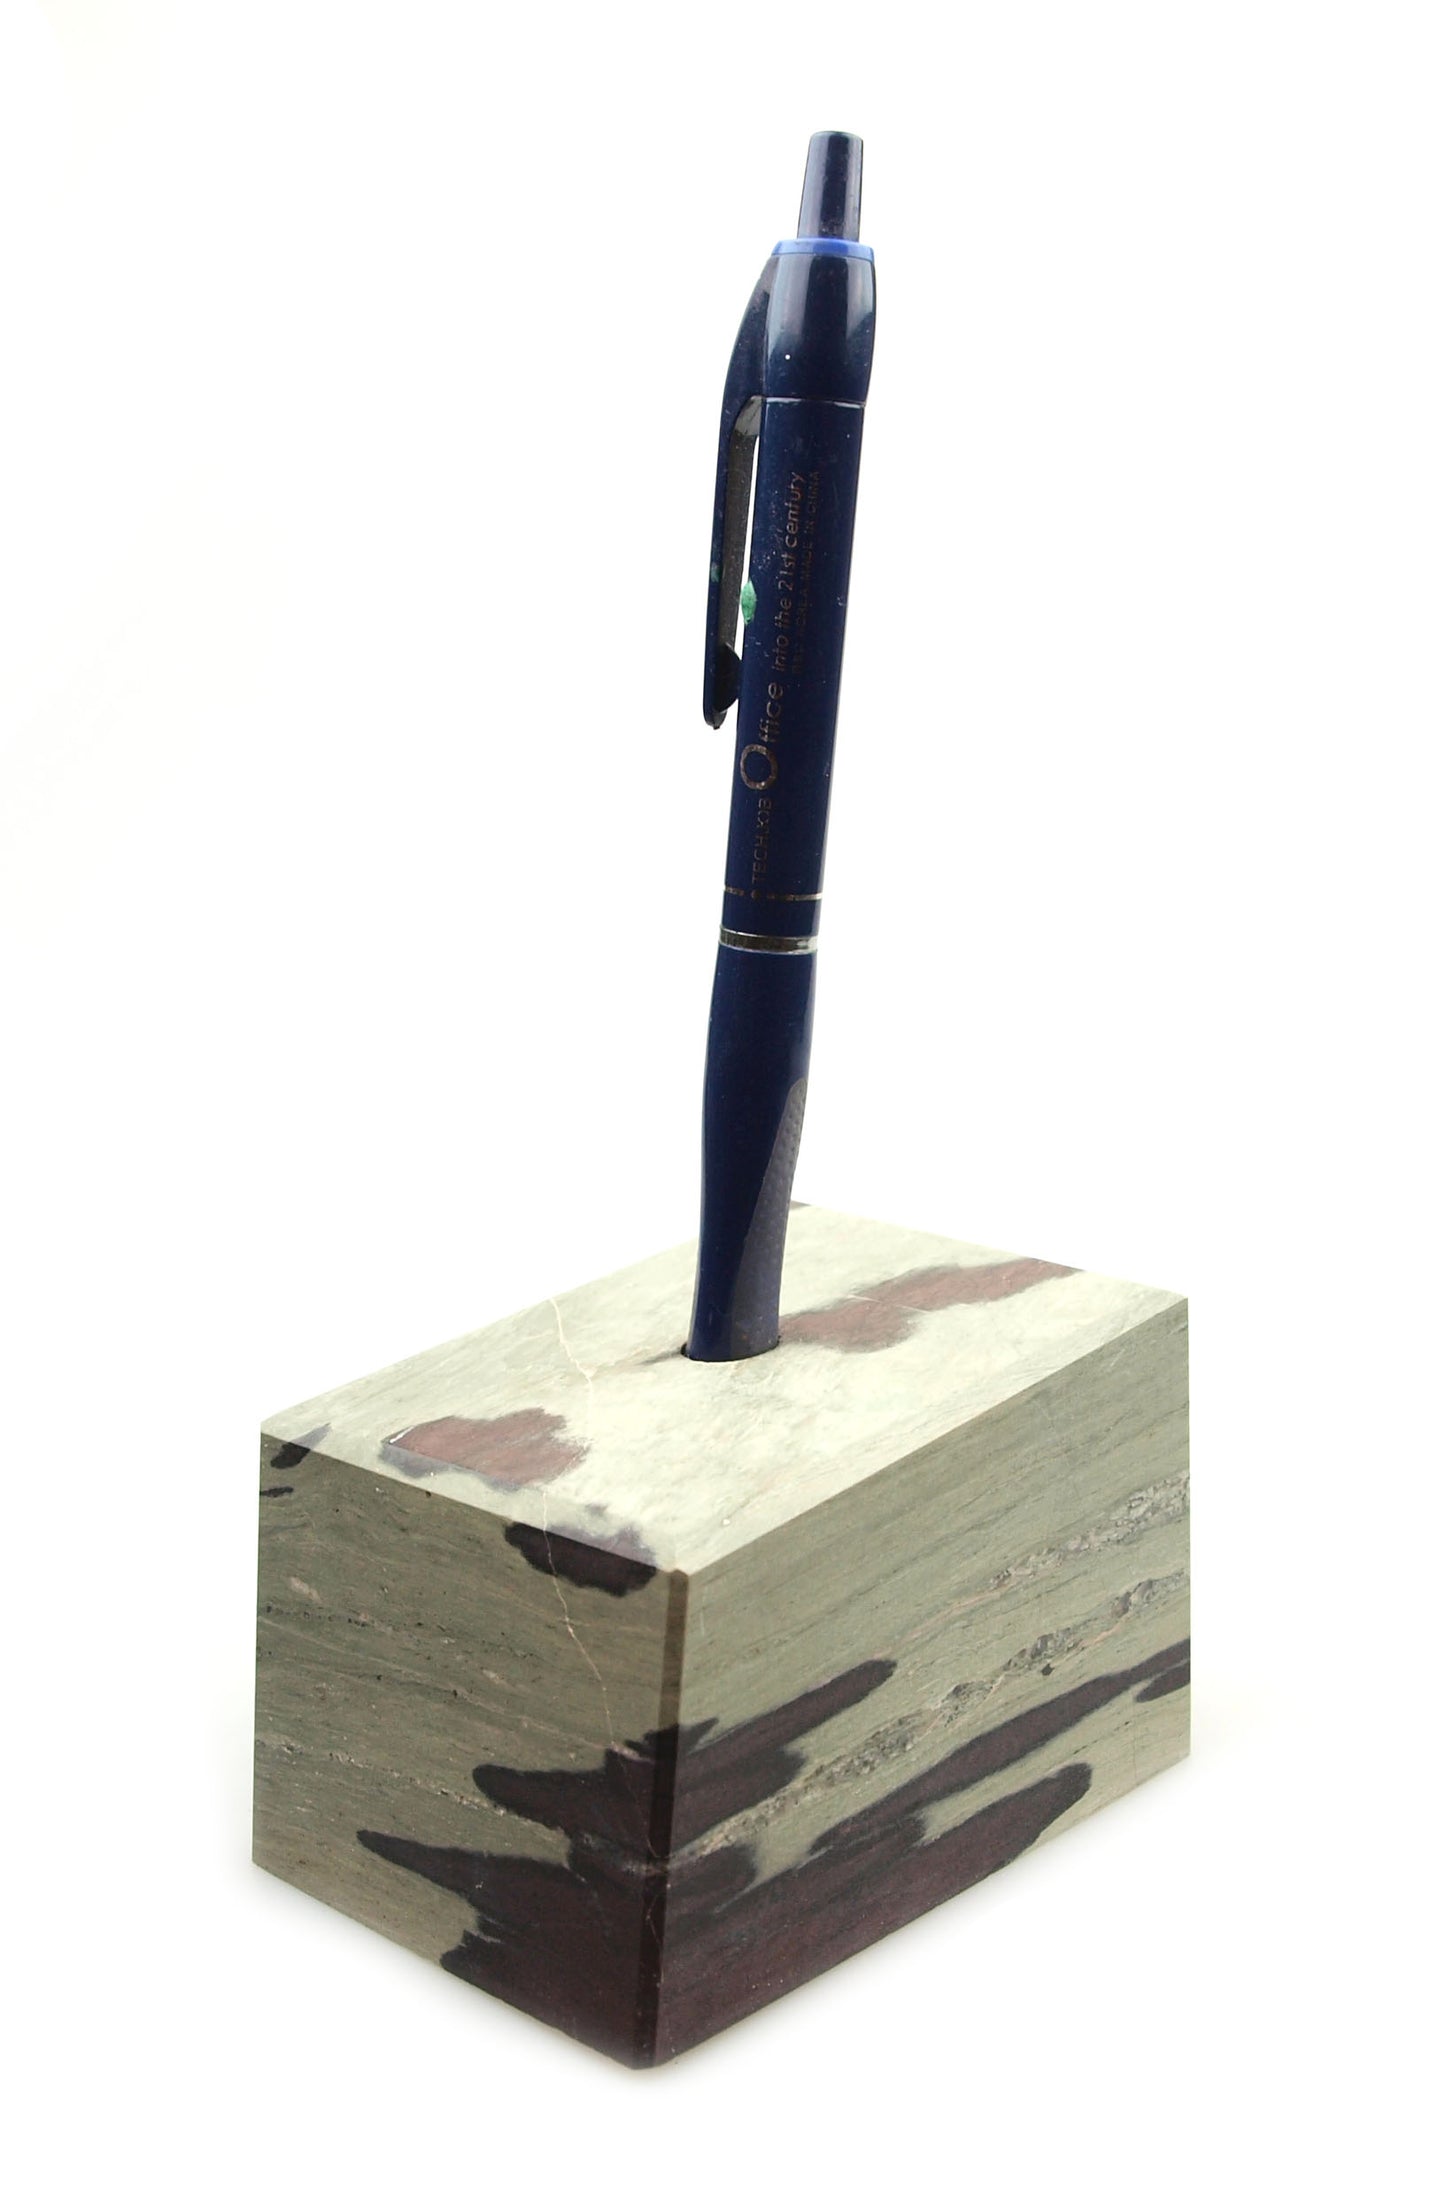 A talc slate pencil stand